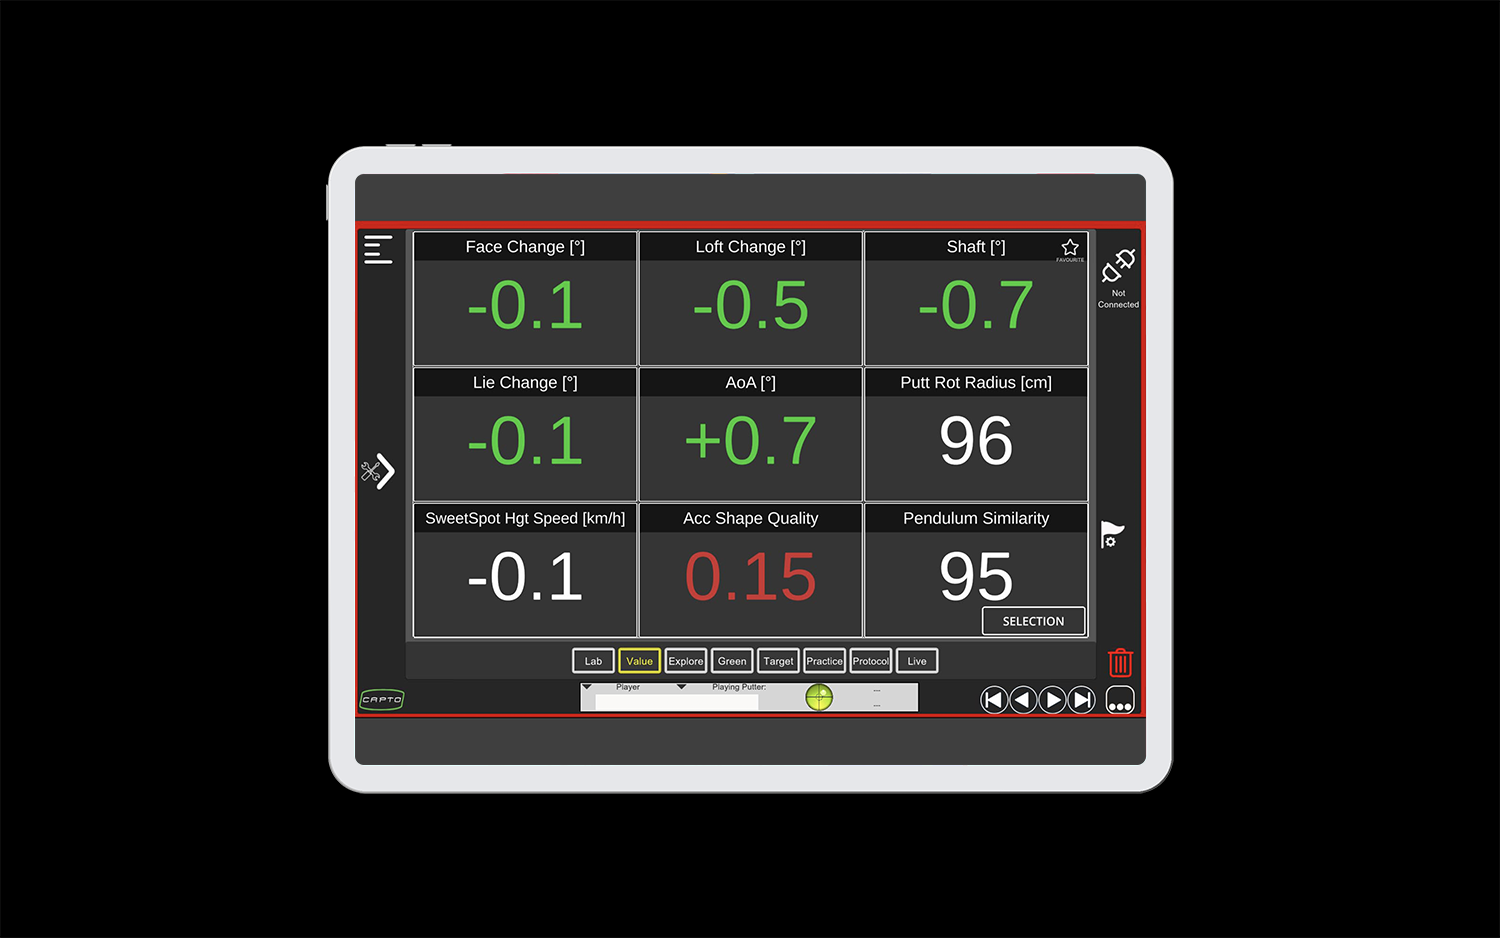 Capto app stroke metrics display on a tablet device